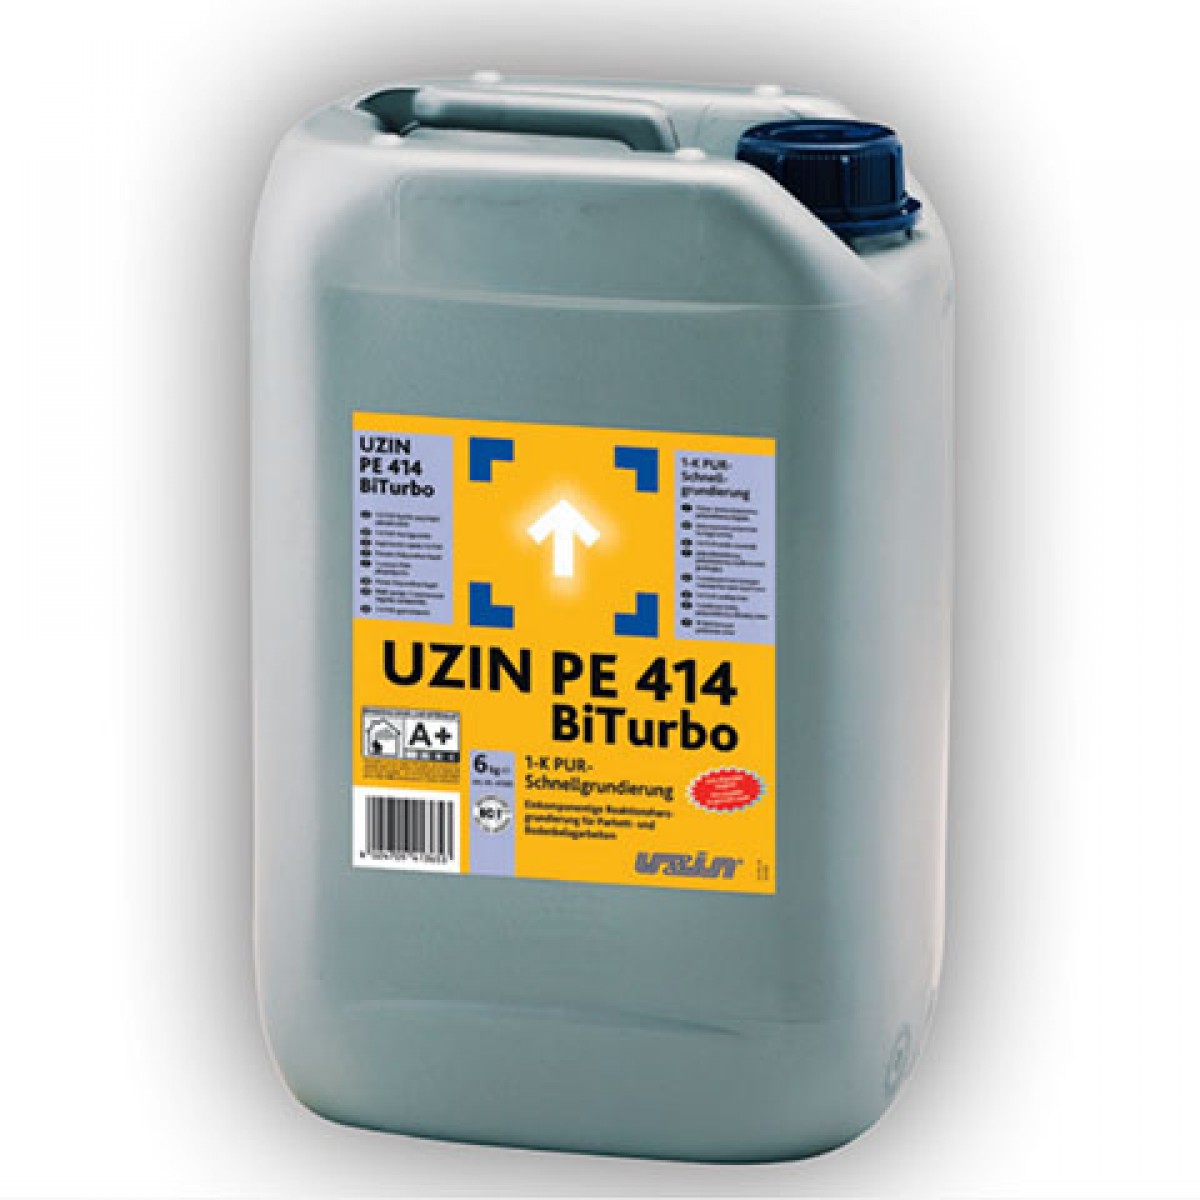 Uzin PE 414 Bi Turbo Грунтовка реакционная 1-комп. (0,9 кг)